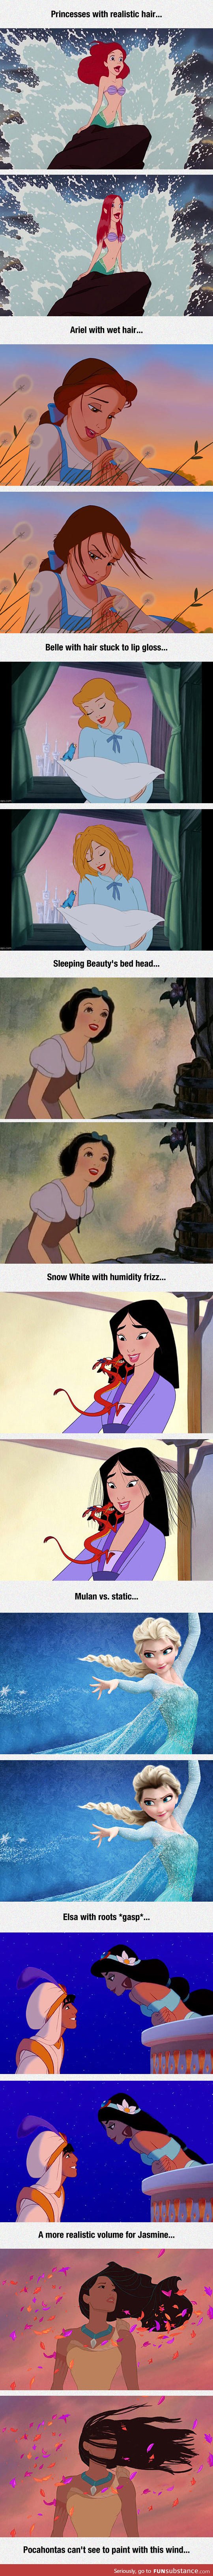 If Disney Princesses had realistic hair